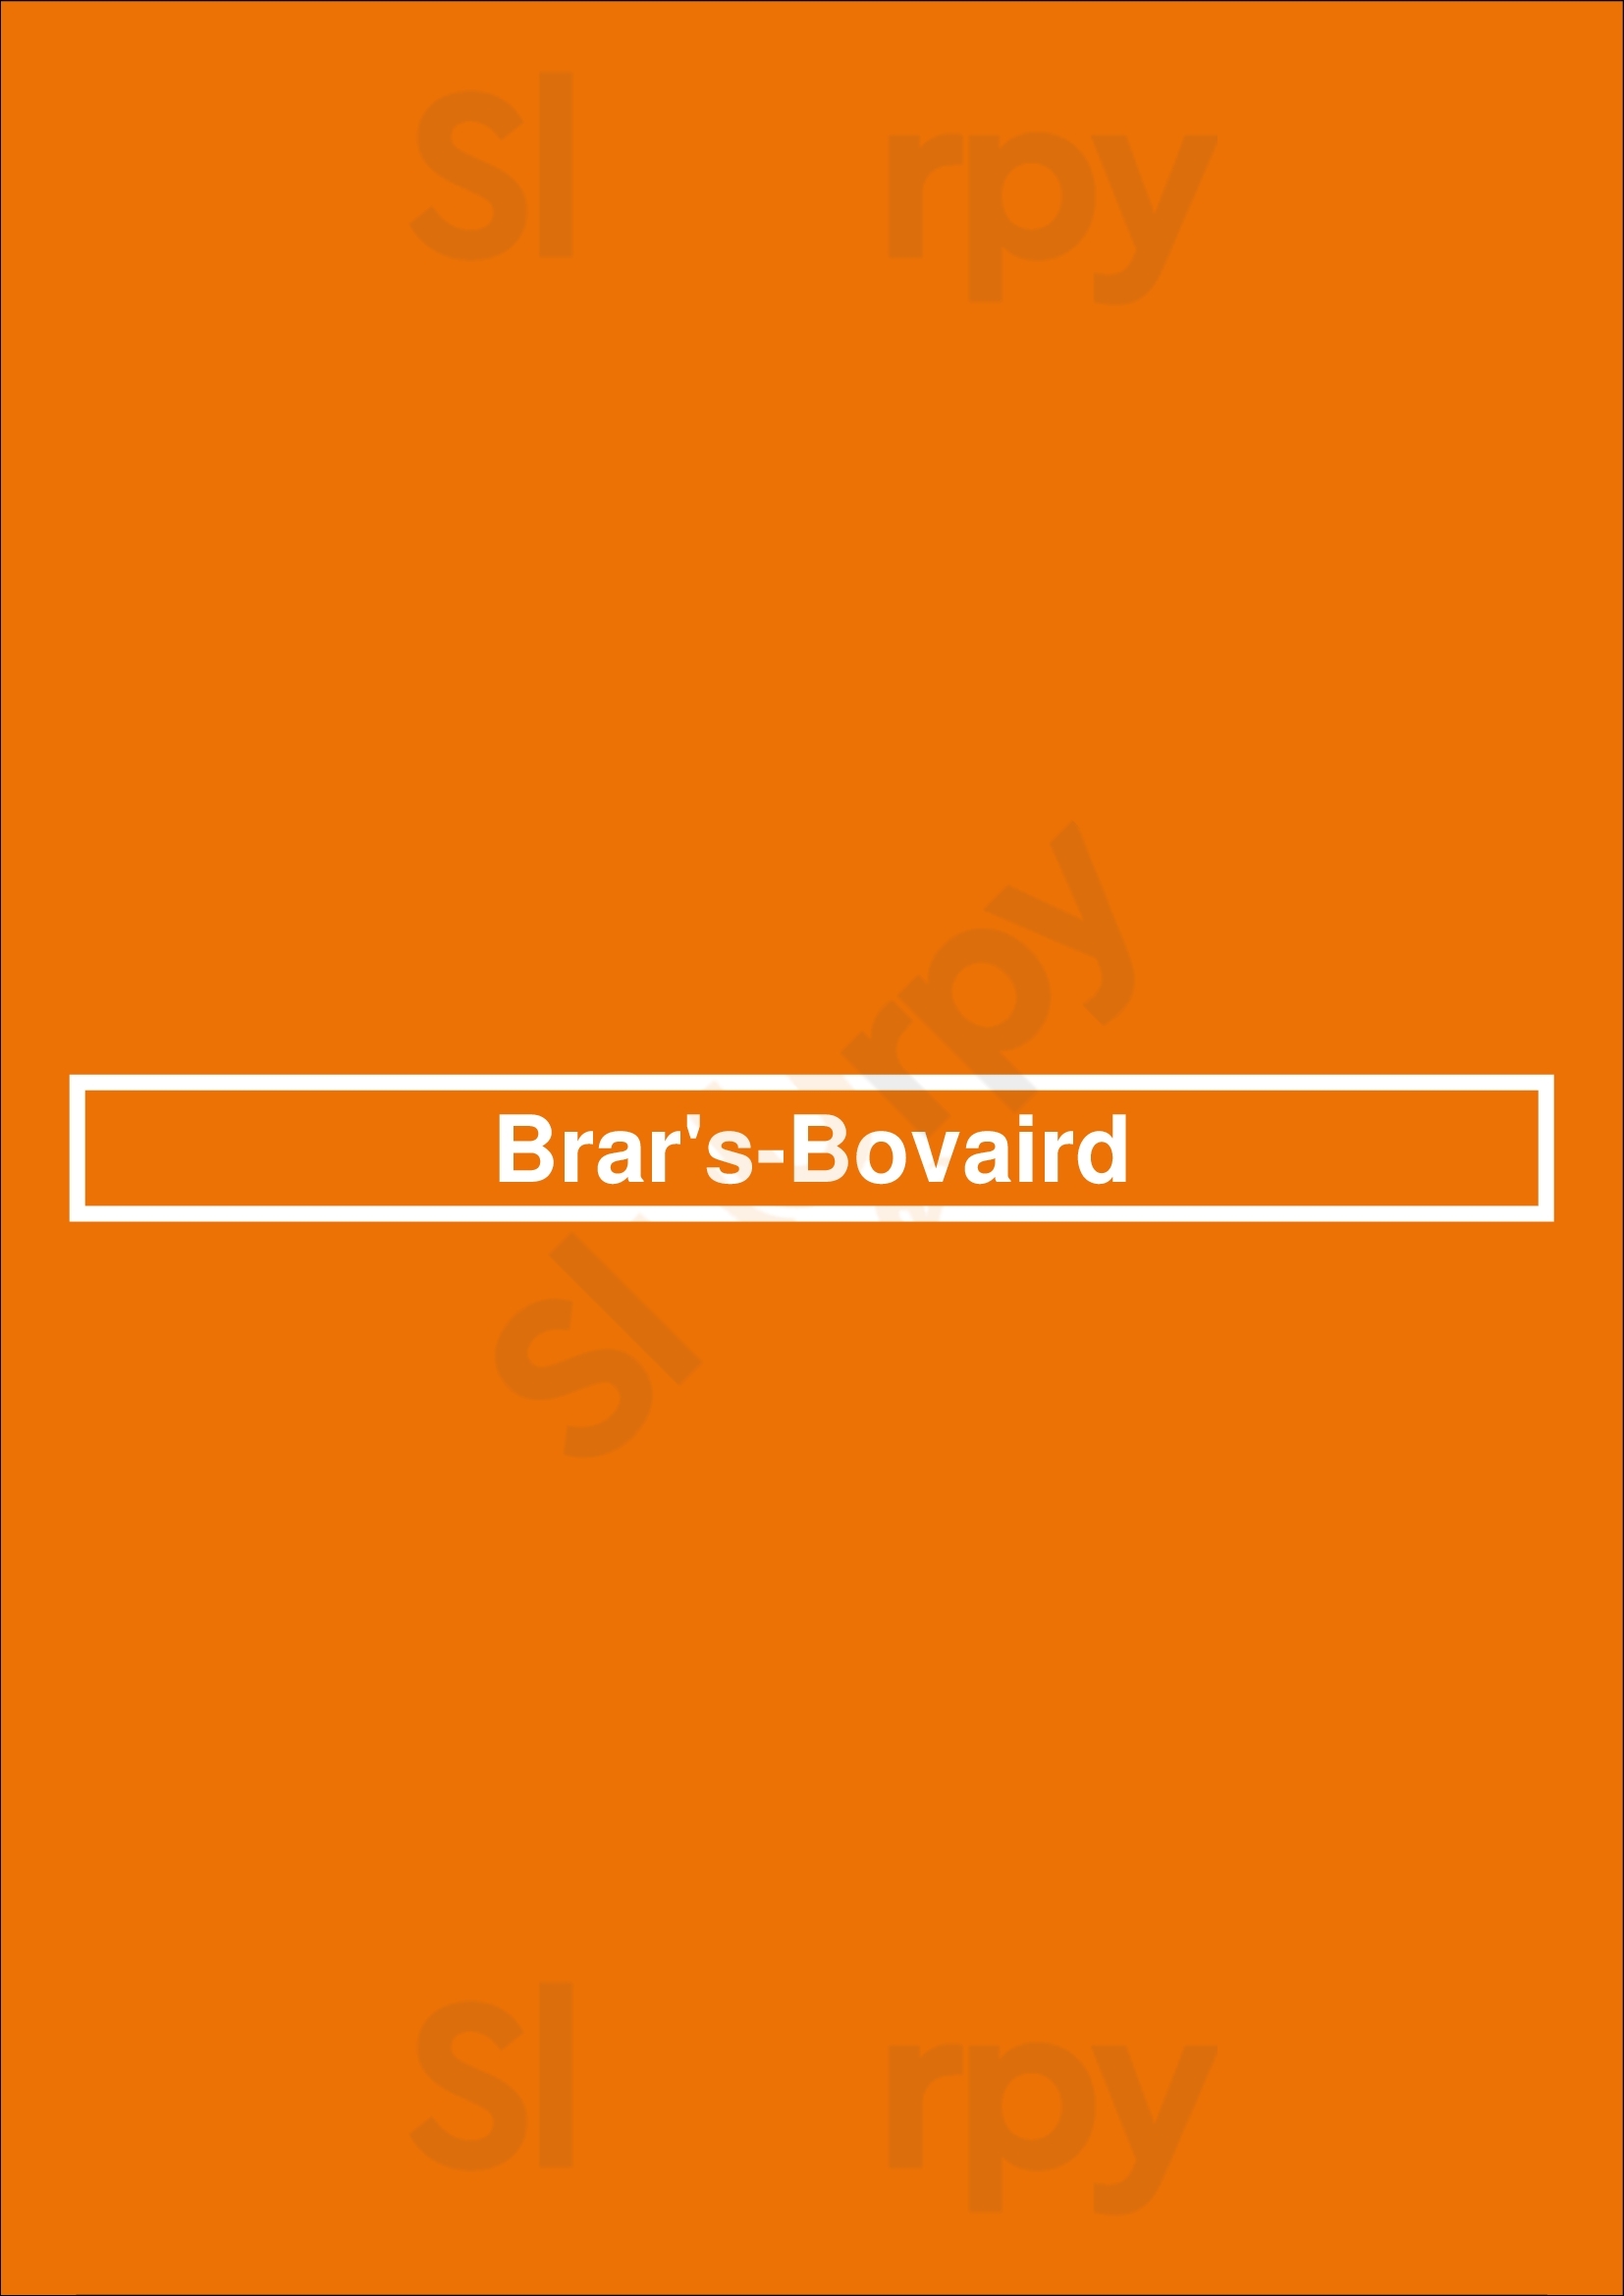 Brar's-bovaird Brampton Menu - 1